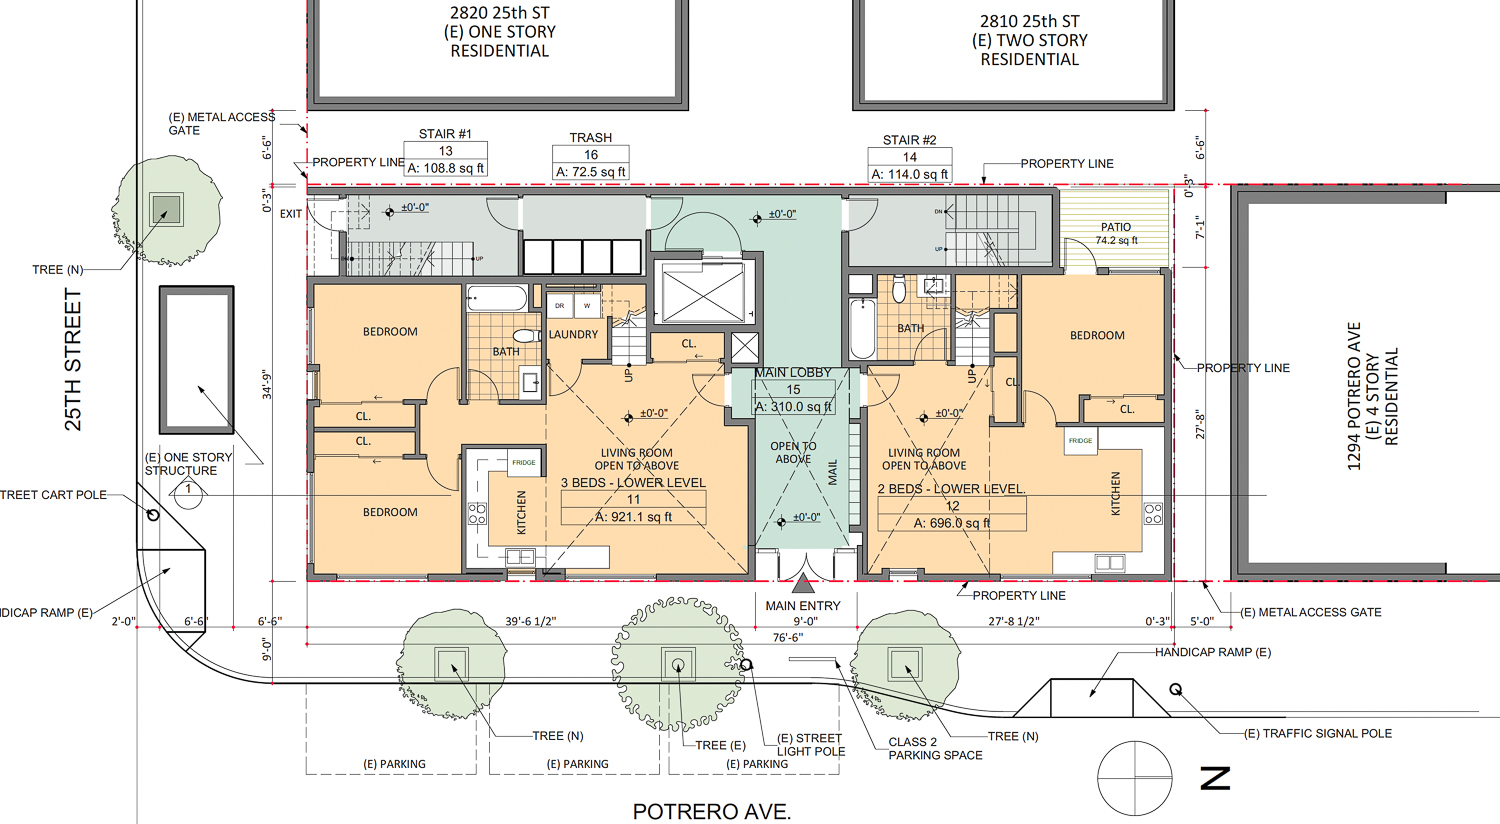 1298 Potrero Avenue ground-level floor-plan, rendering by De Quesada Architects